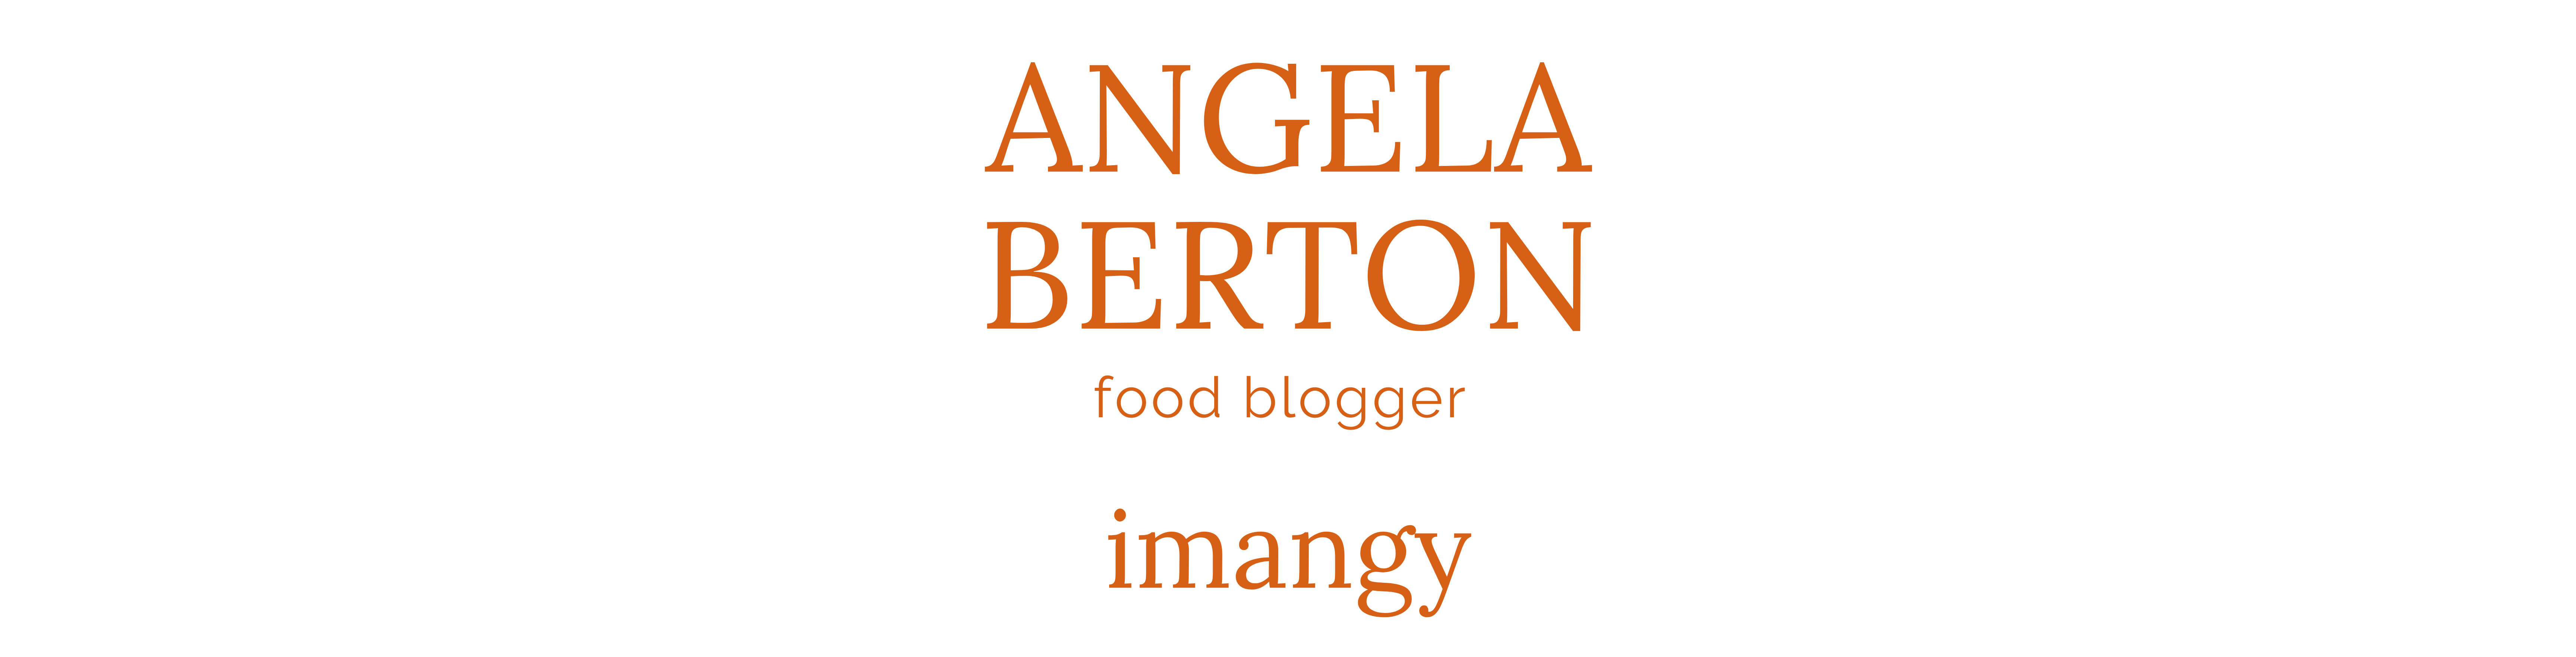 angela berton foodblogger imangy